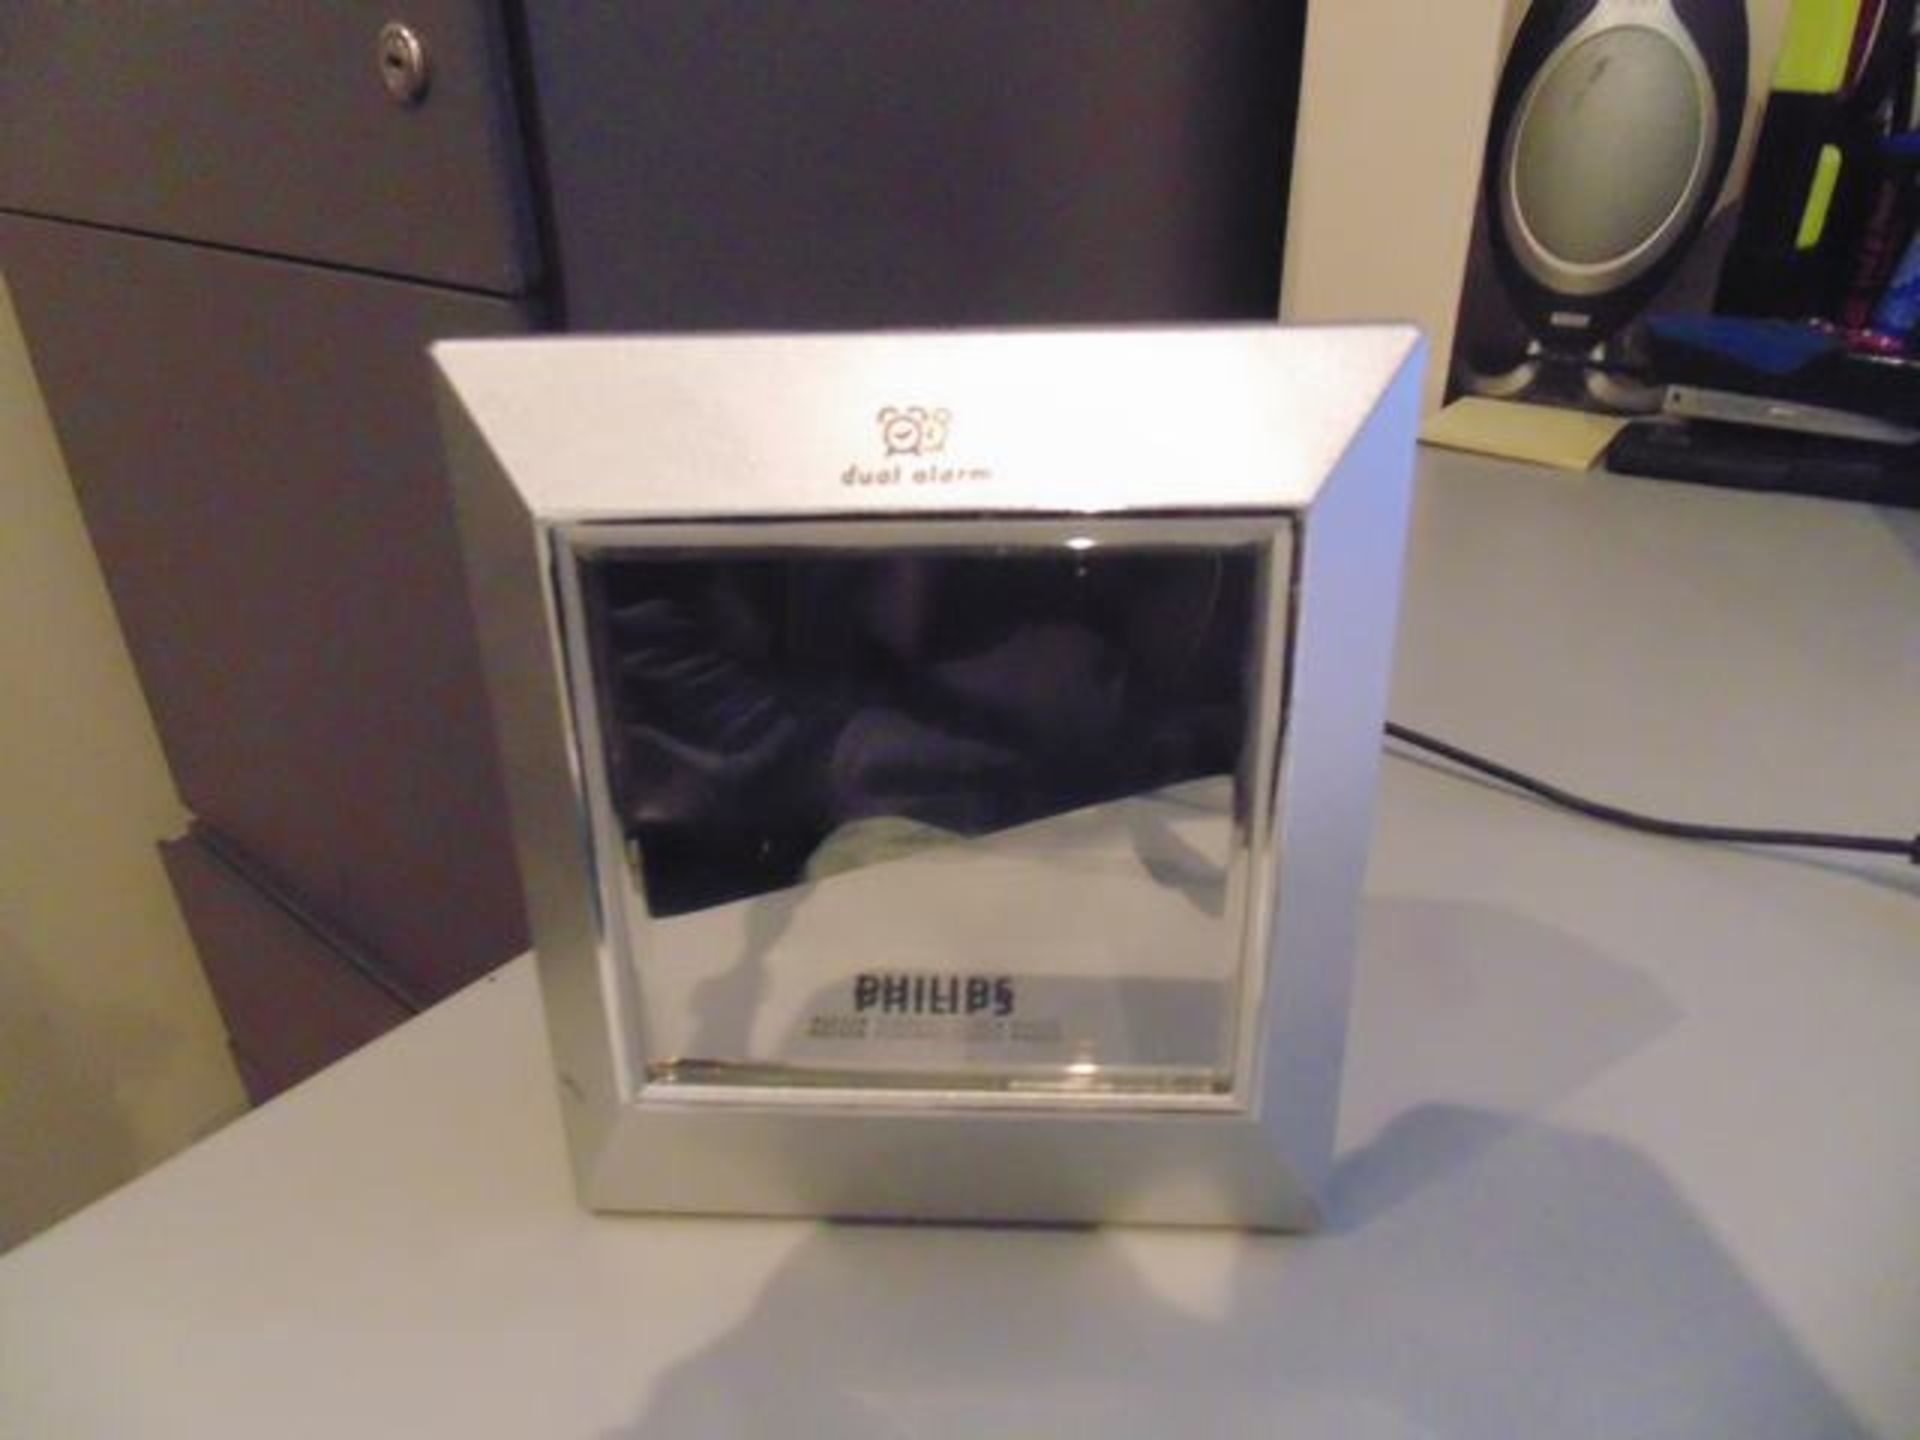 2 x Philips AJ3230 elegant clock alarm radio